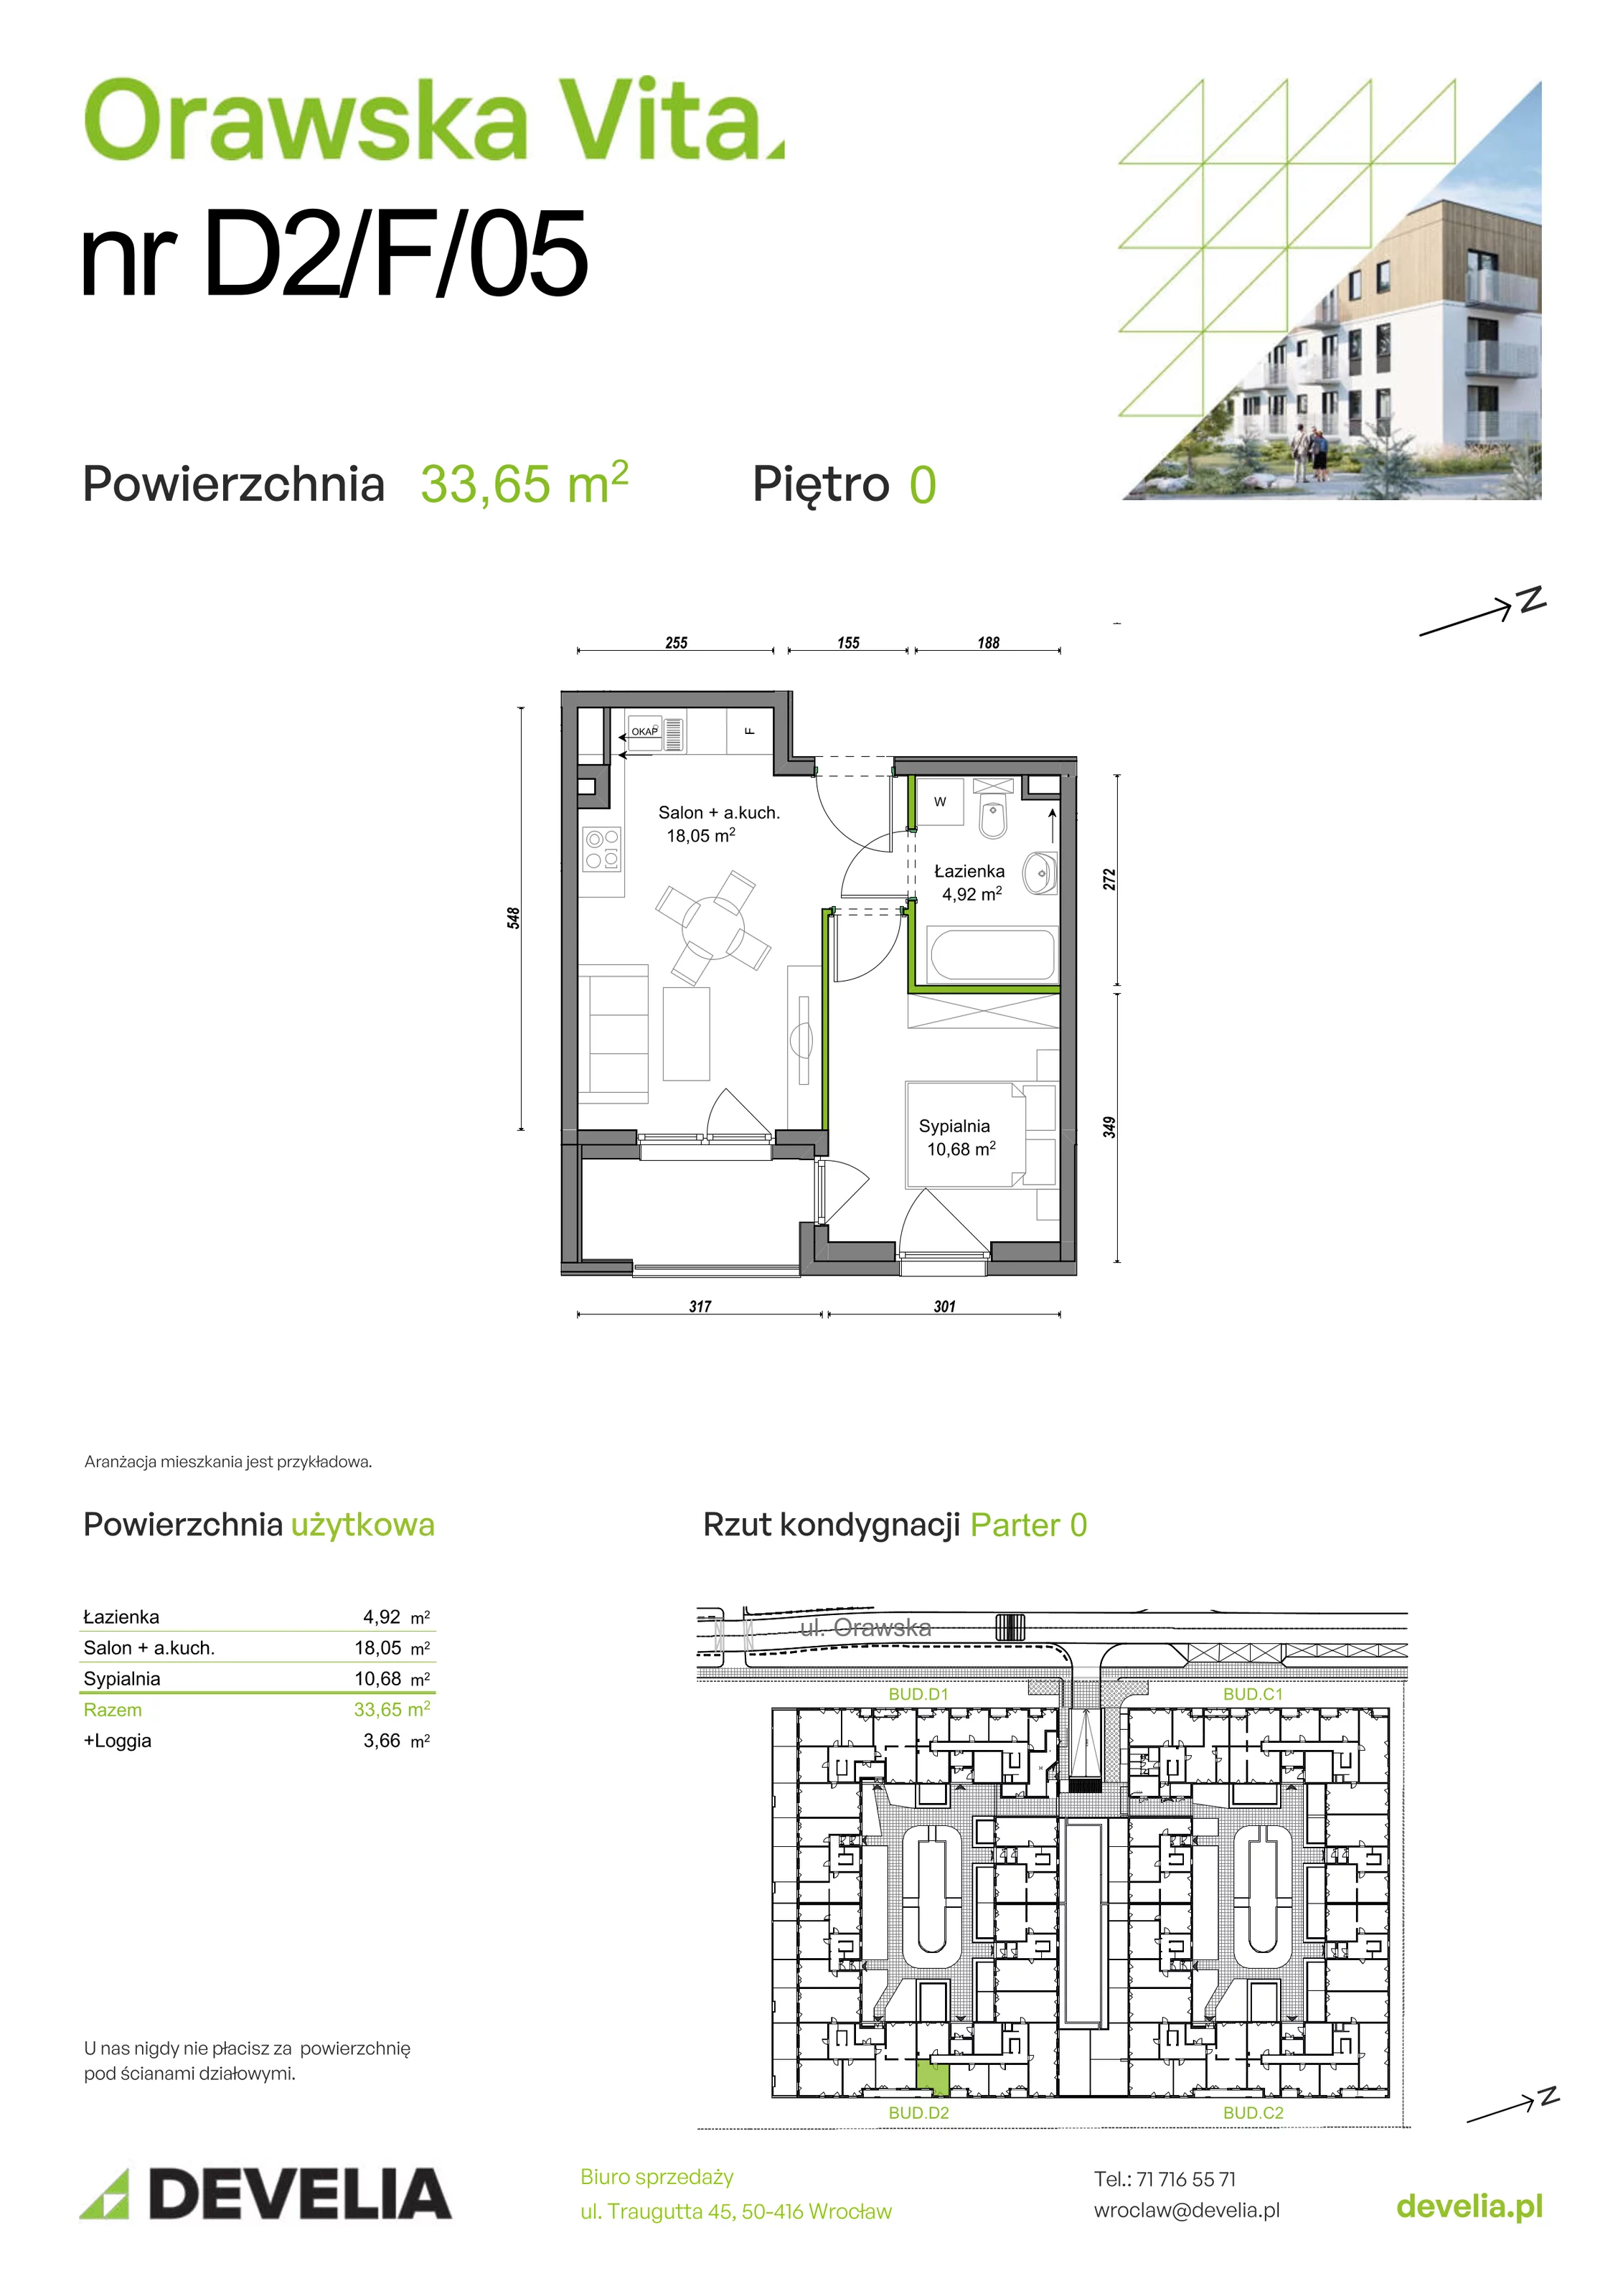 Mieszkanie 33,65 m², parter, oferta nr D2/F/05, Orawska Vita, Wrocław, Ołtaszyn, Krzyki, ul. Orawska 73